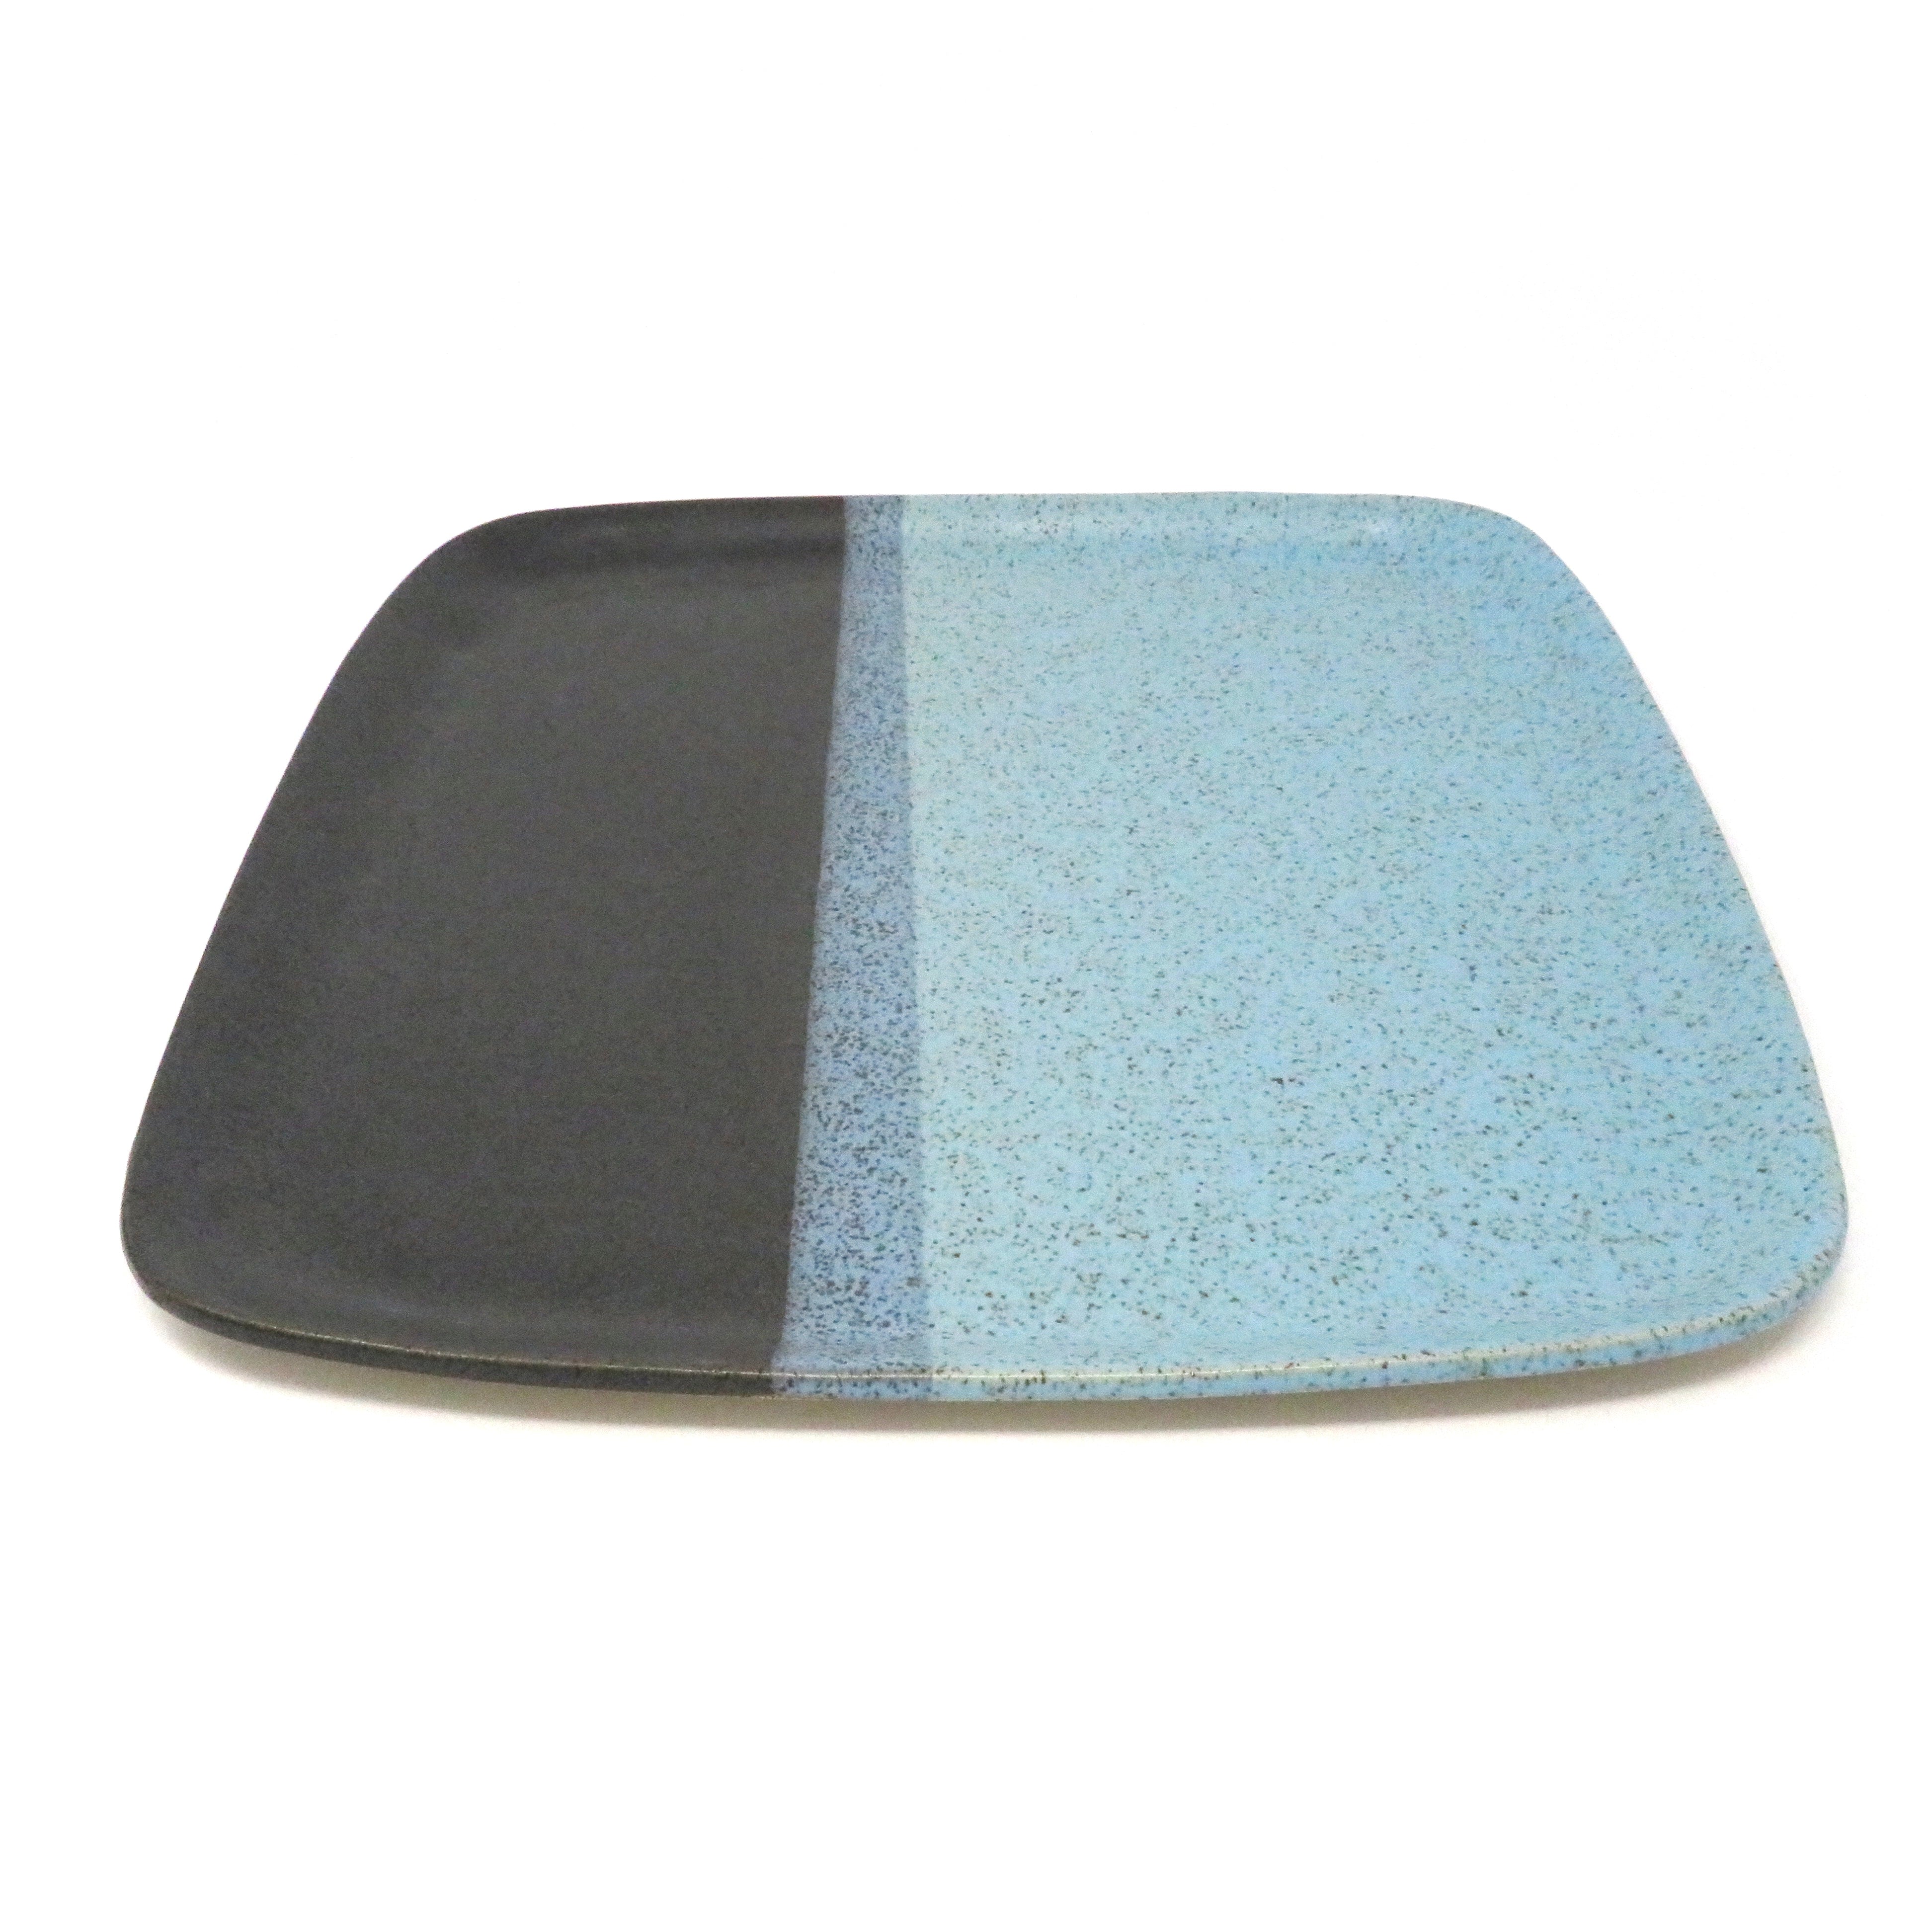 ceramic square plate blue and black